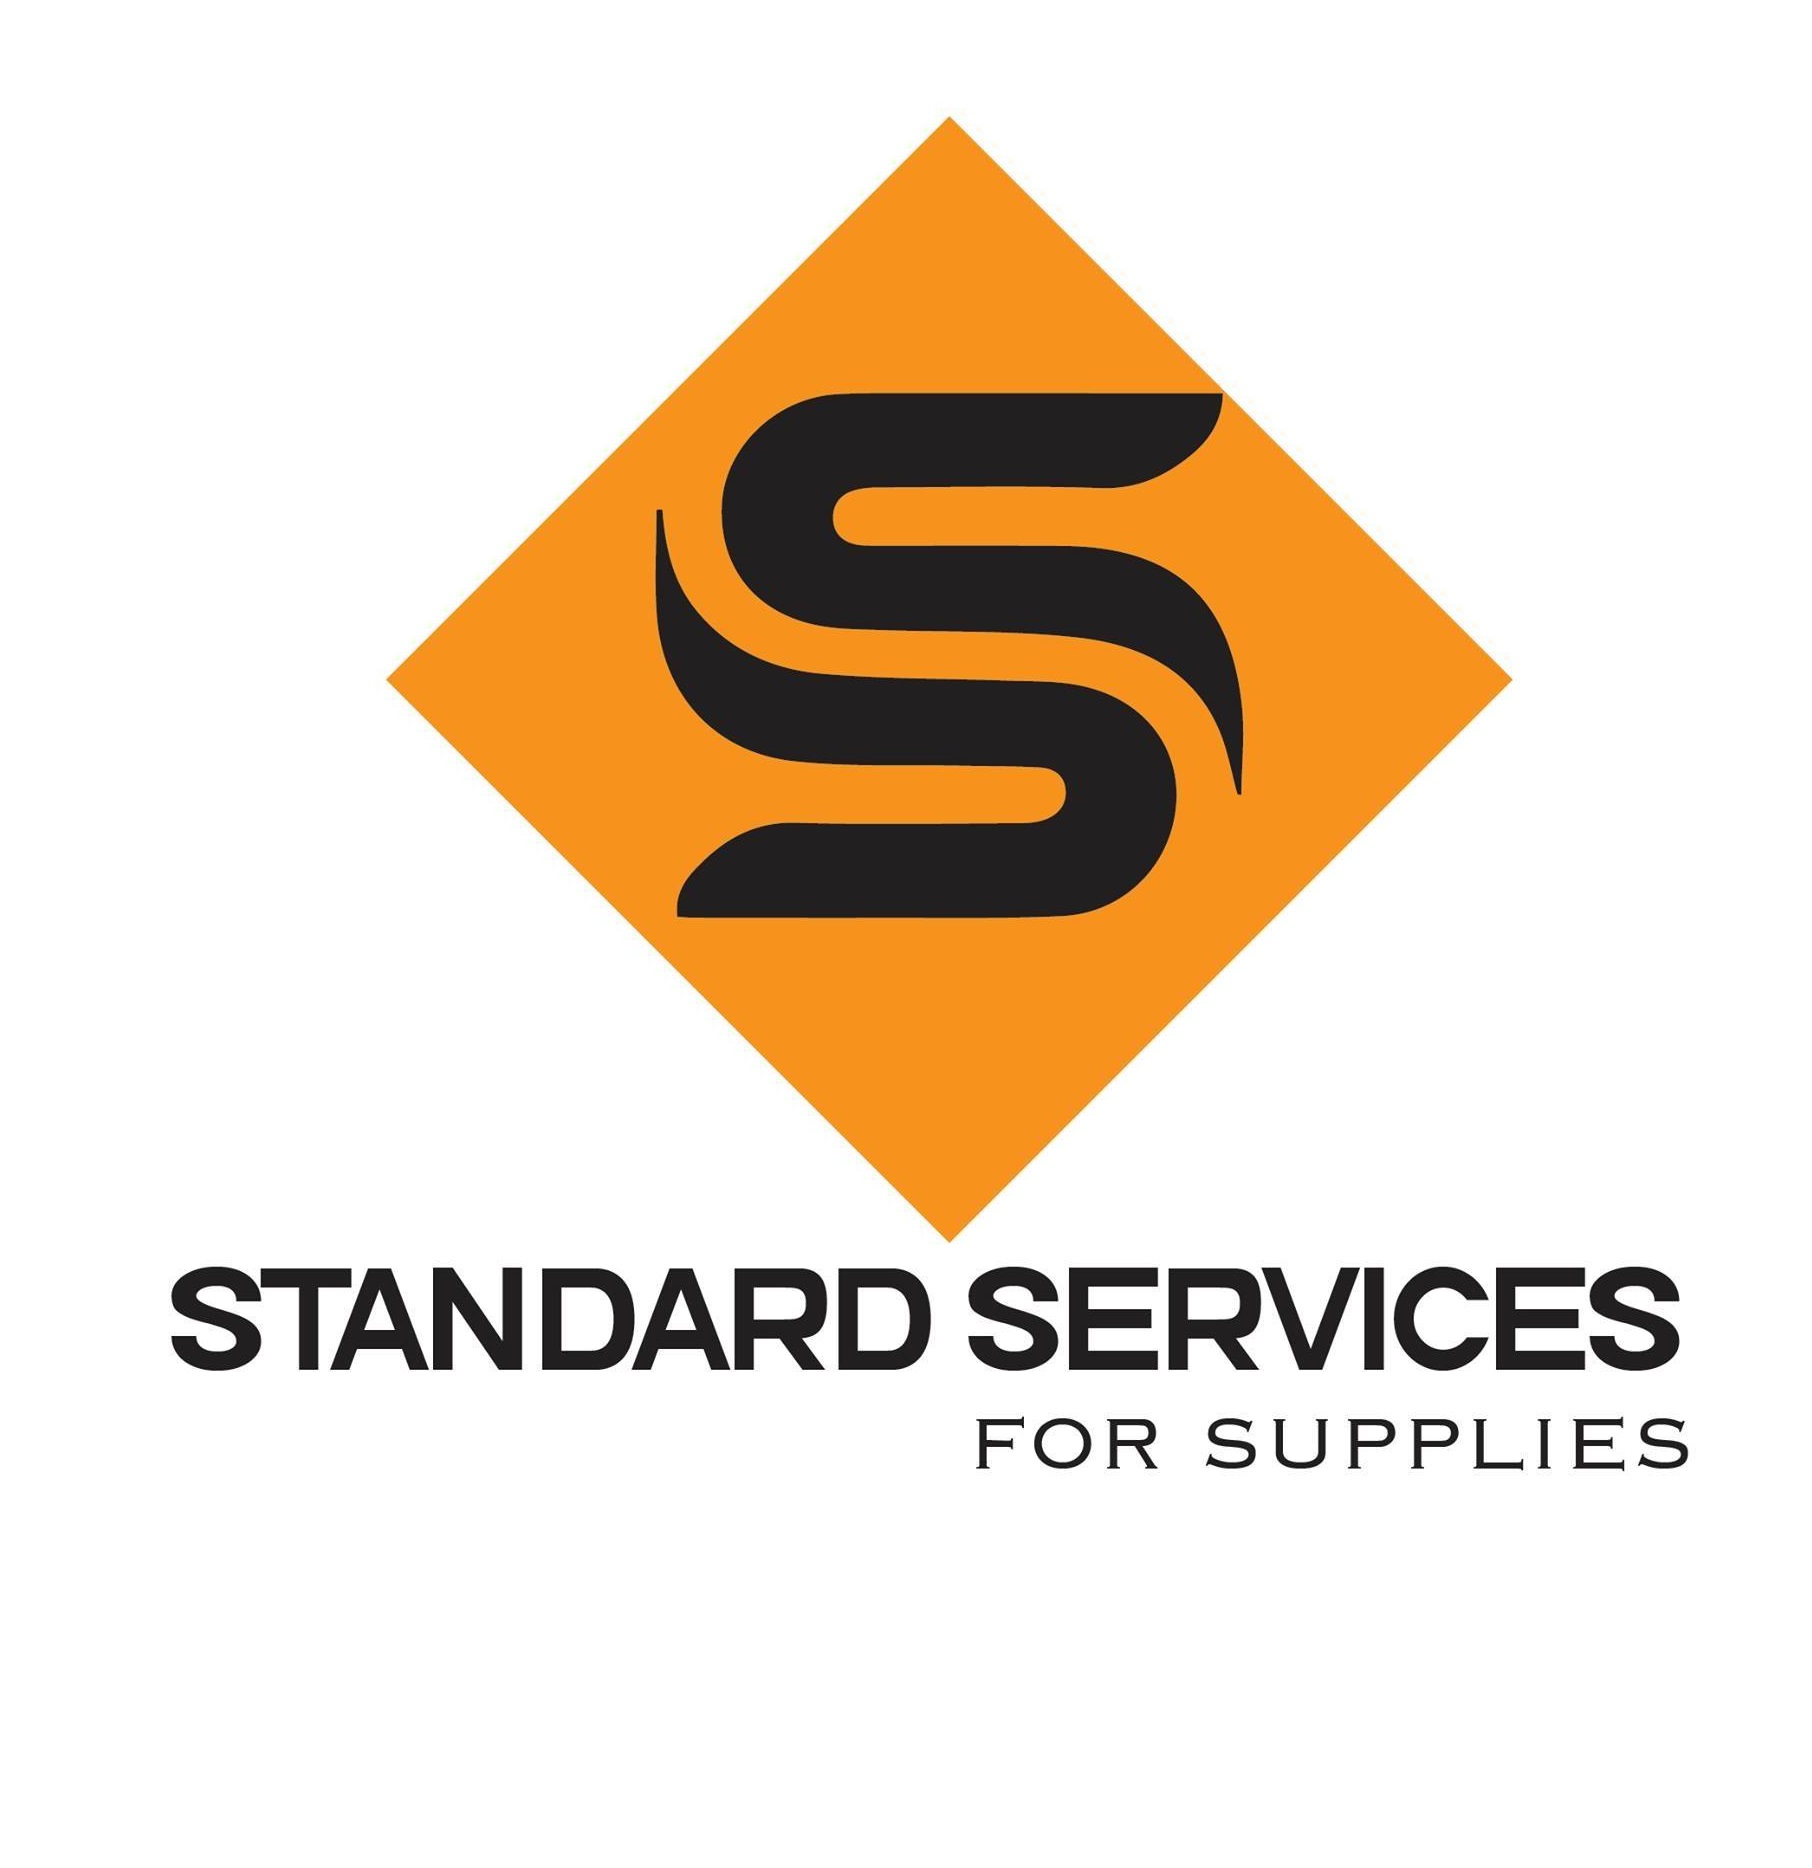 Standard service